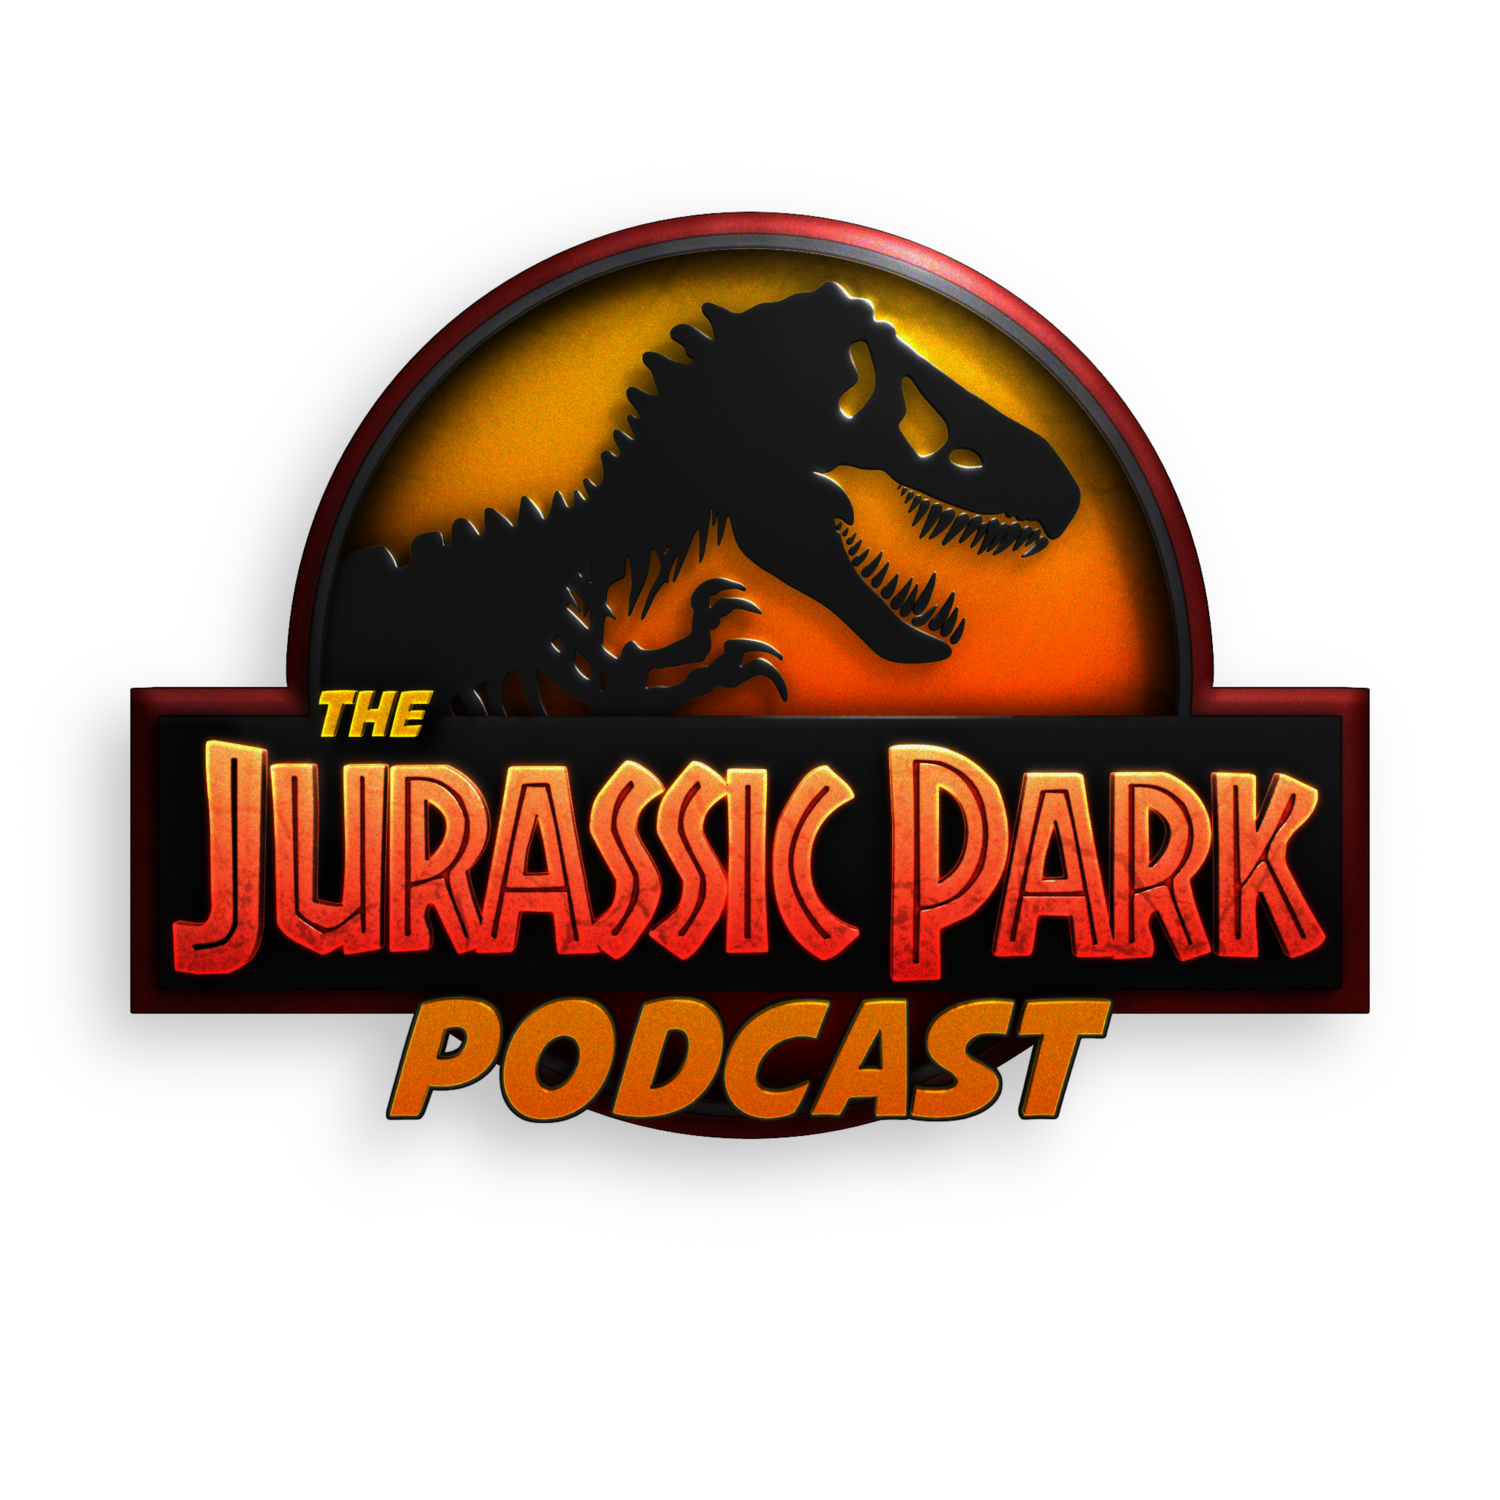 Jurassic World Logo PNG